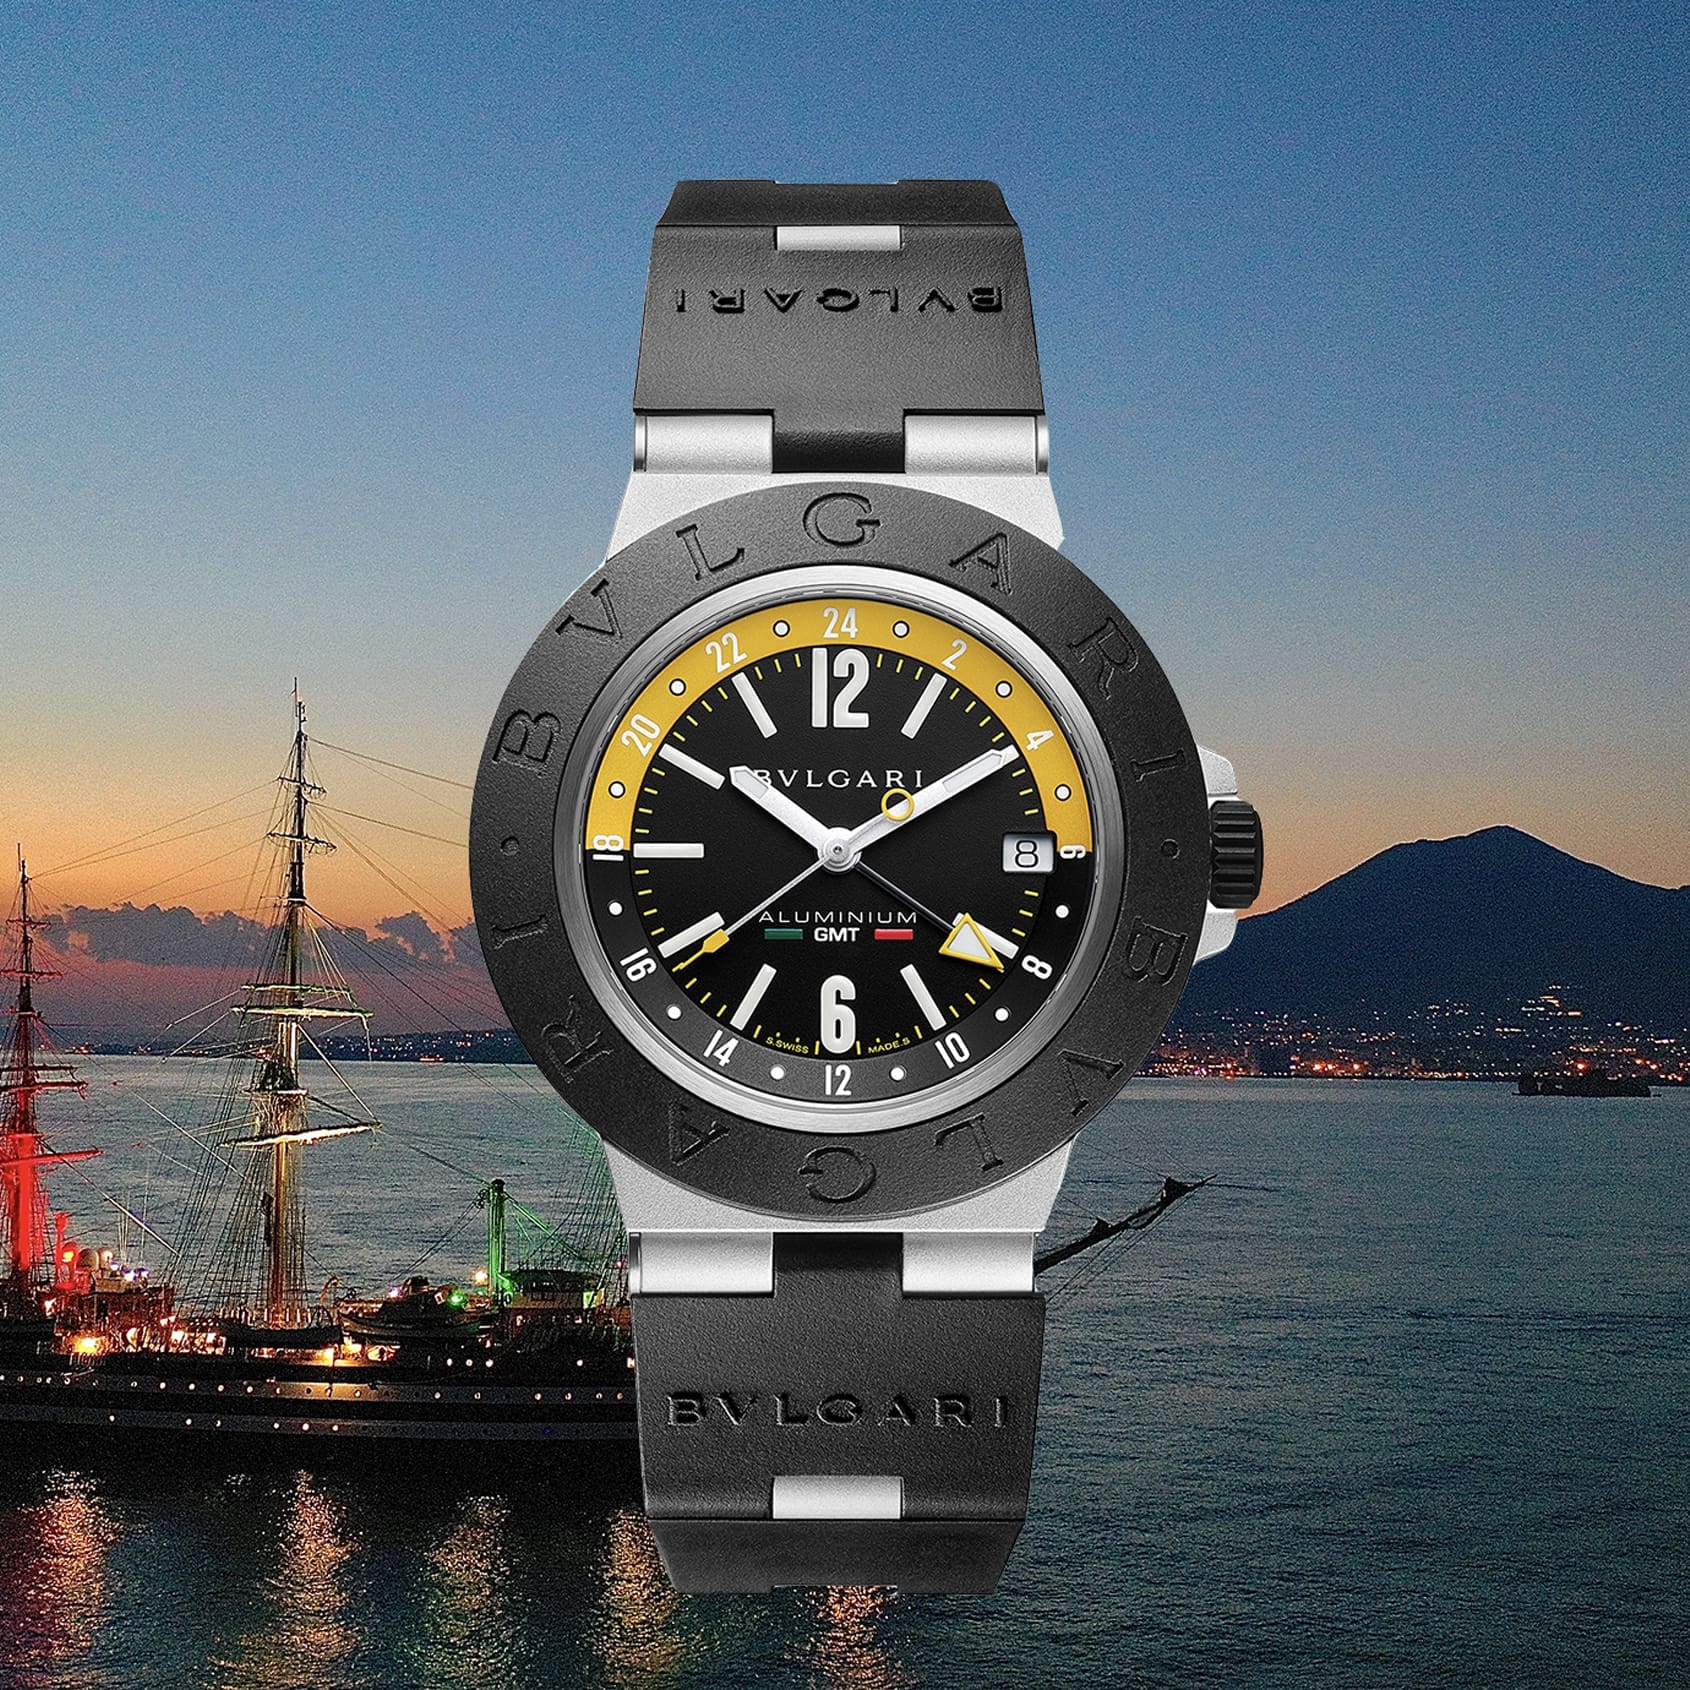 INTRODUCING: The Bulgari Aluminium GMT Amerigo Vespucci sets sail